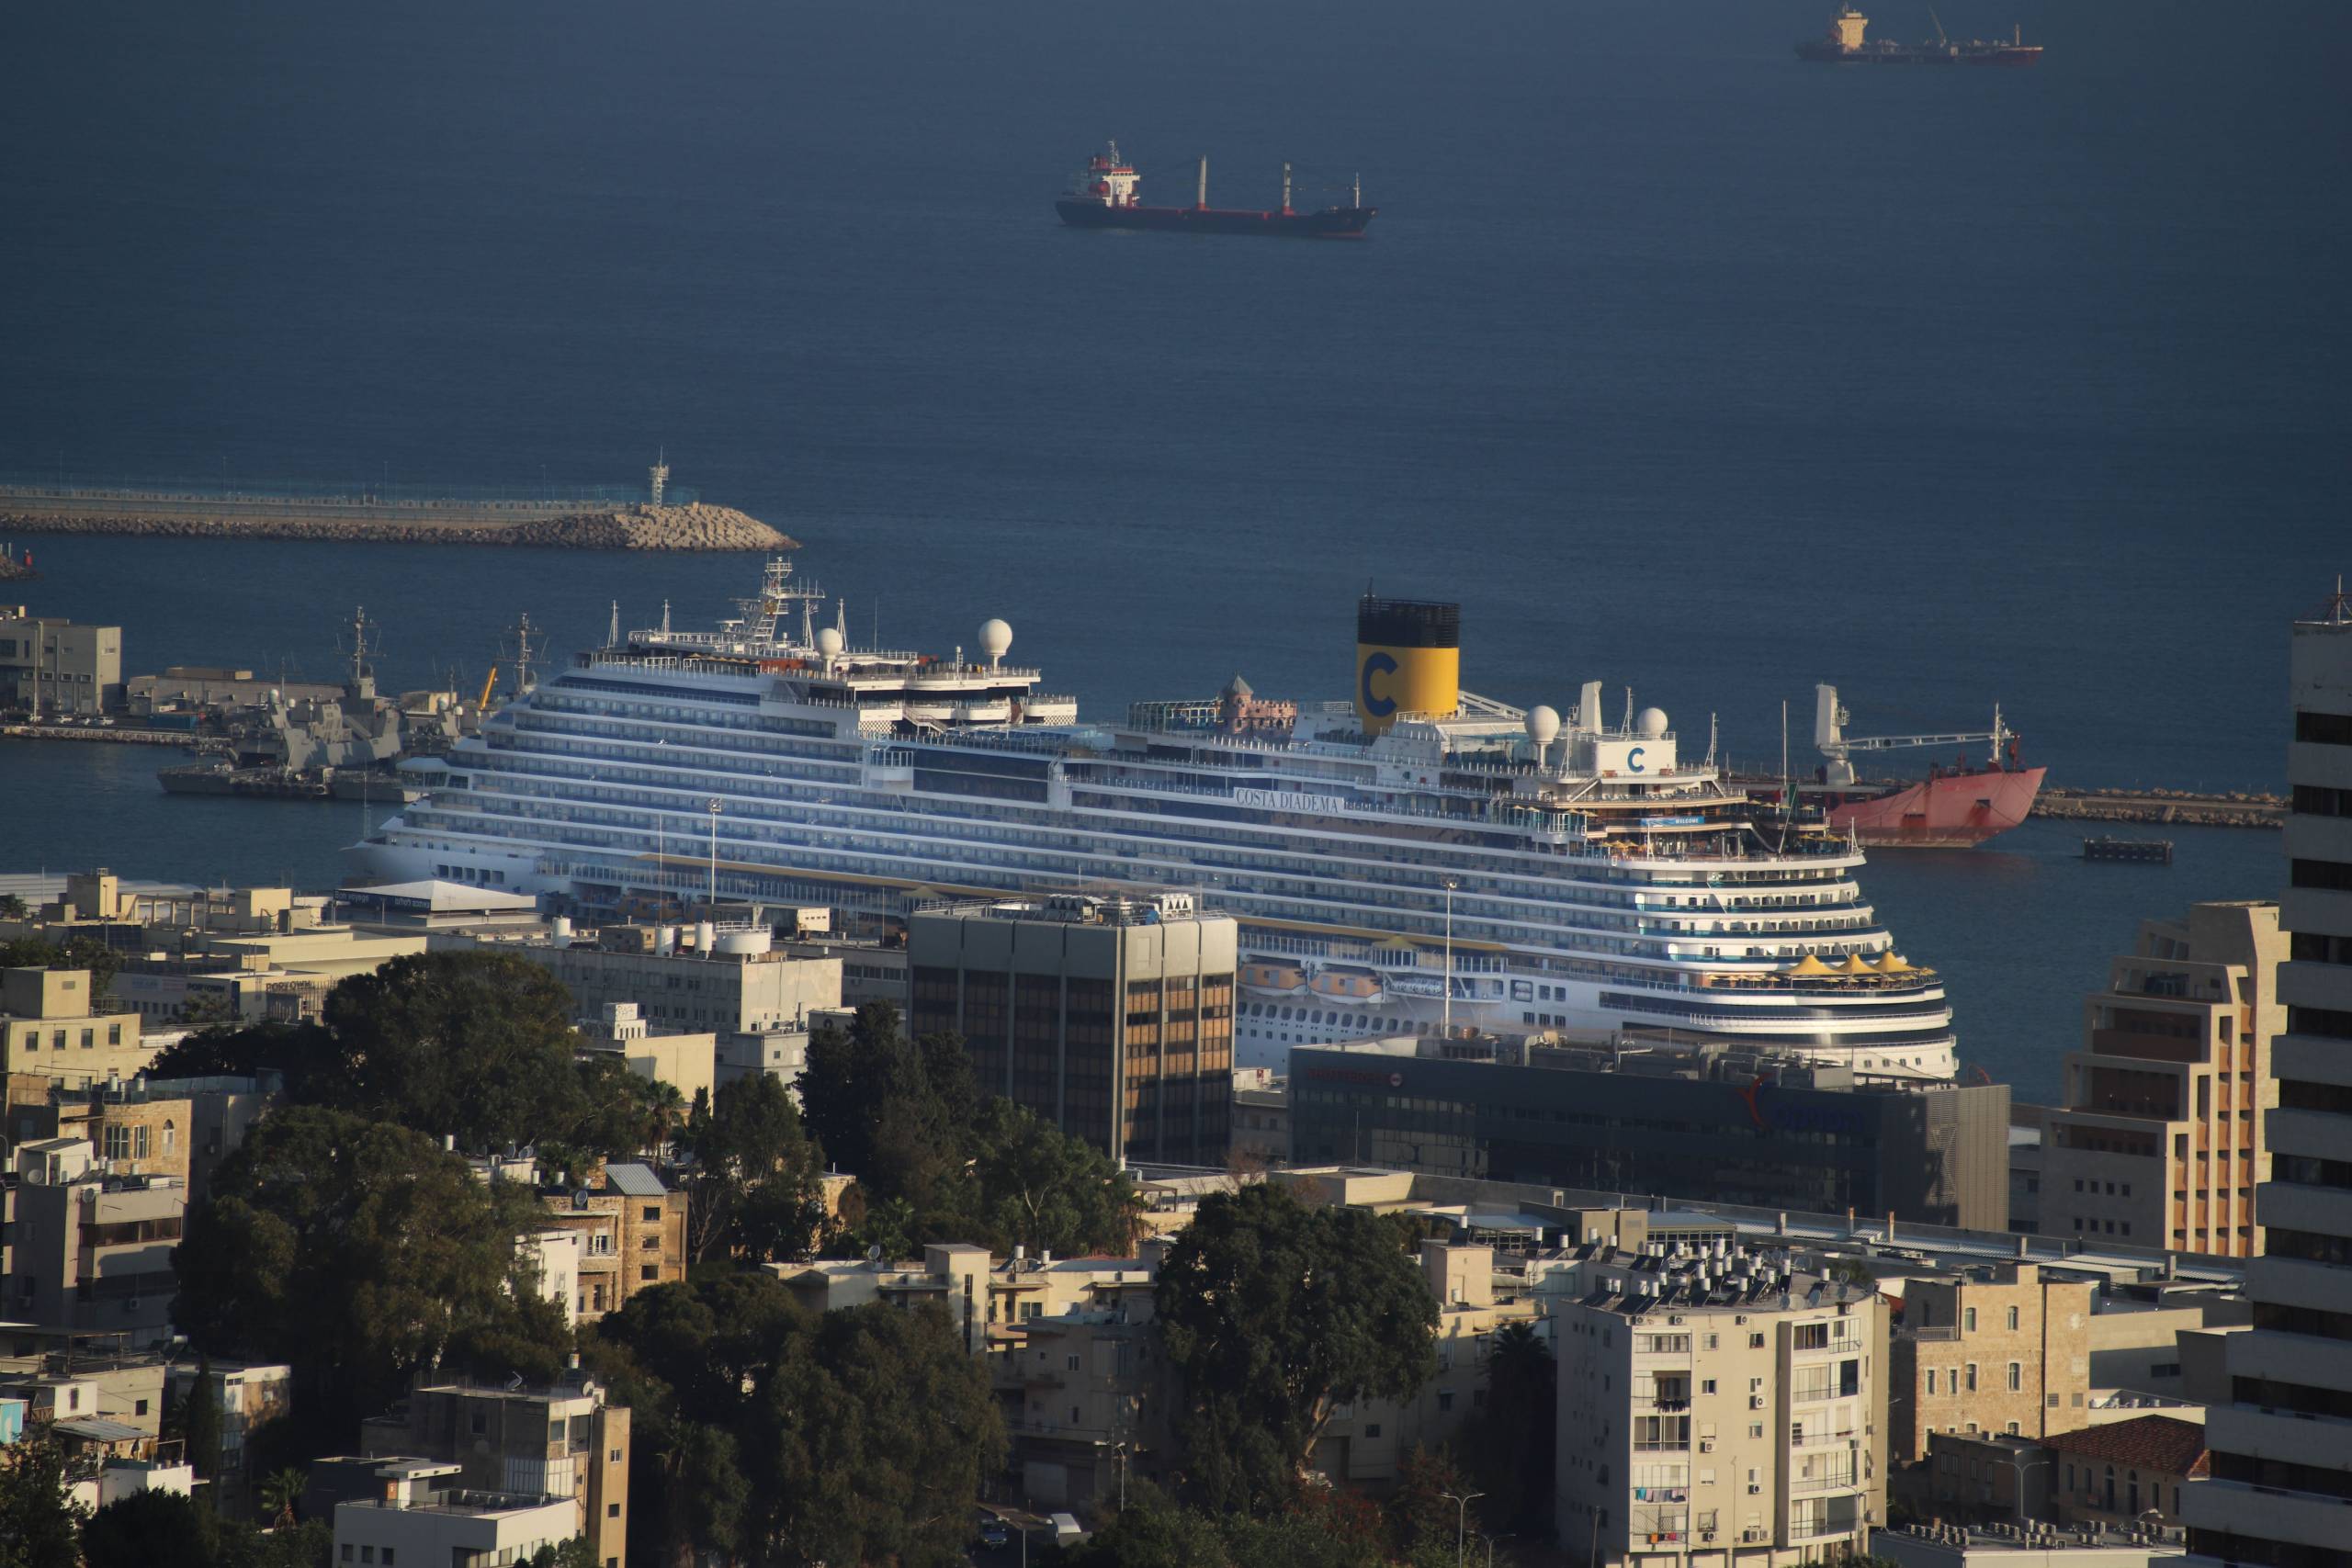 Costa Diadema, the largest cruise ship under Italian flag